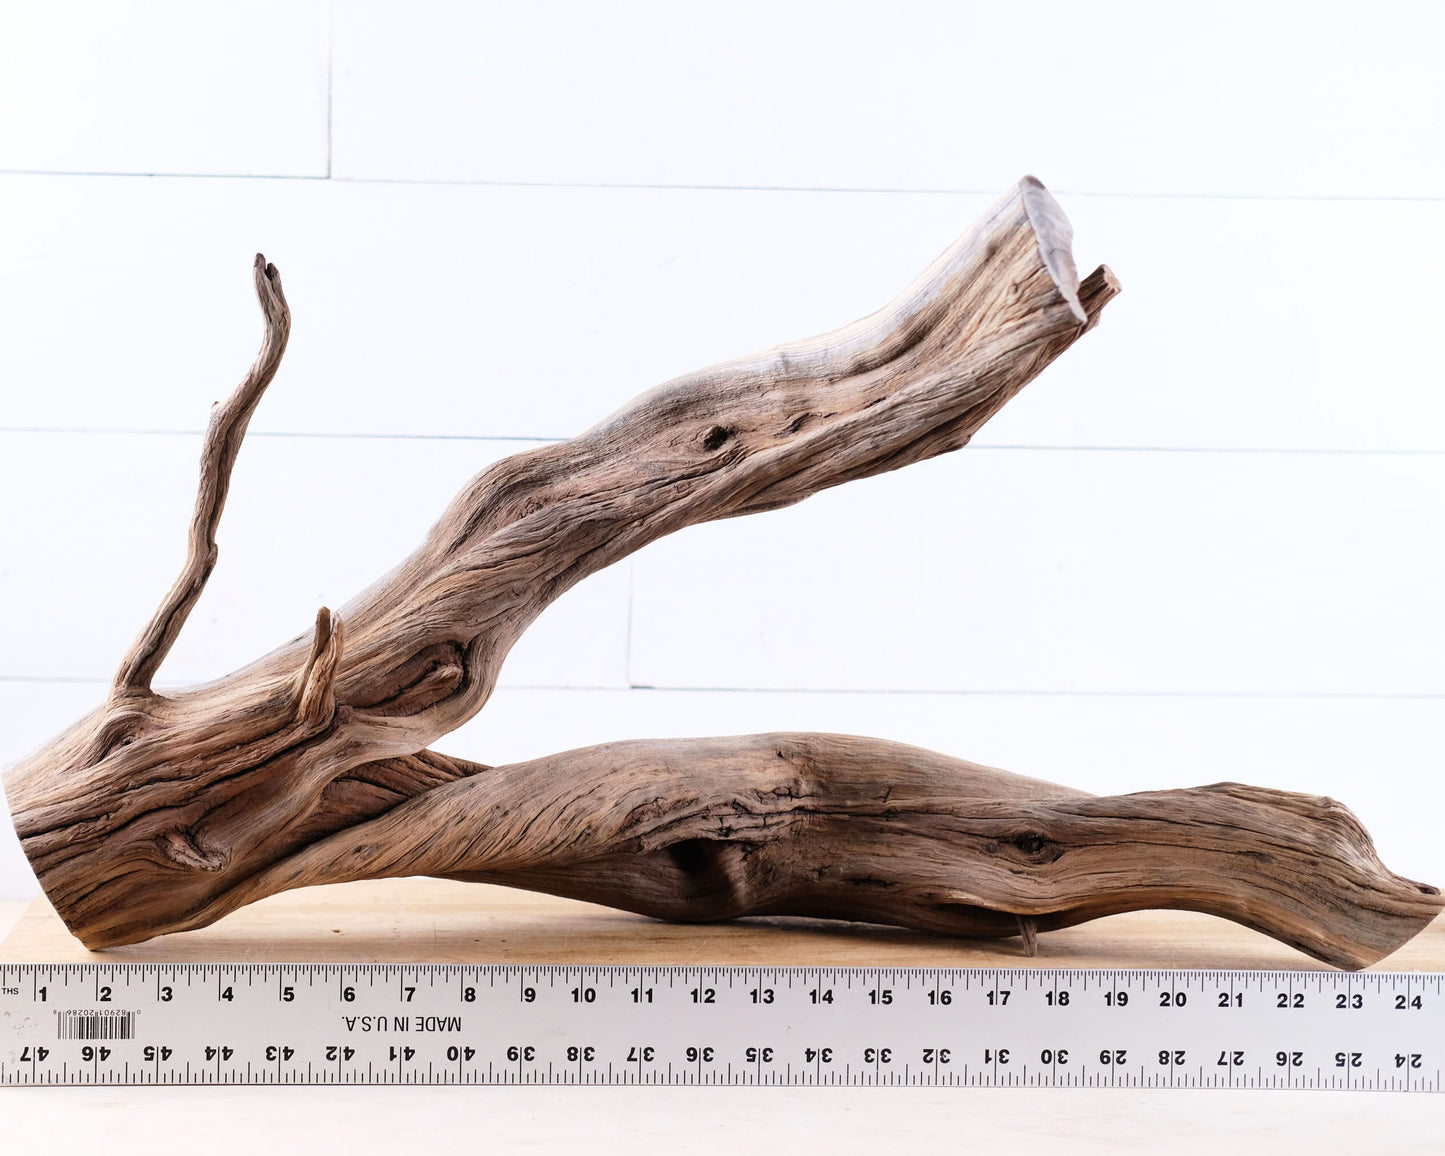 Manzanita 24" Driftwood Branch, Large Reptile Perch, Aquarium Centerpiece, Terrarium Wood Climb